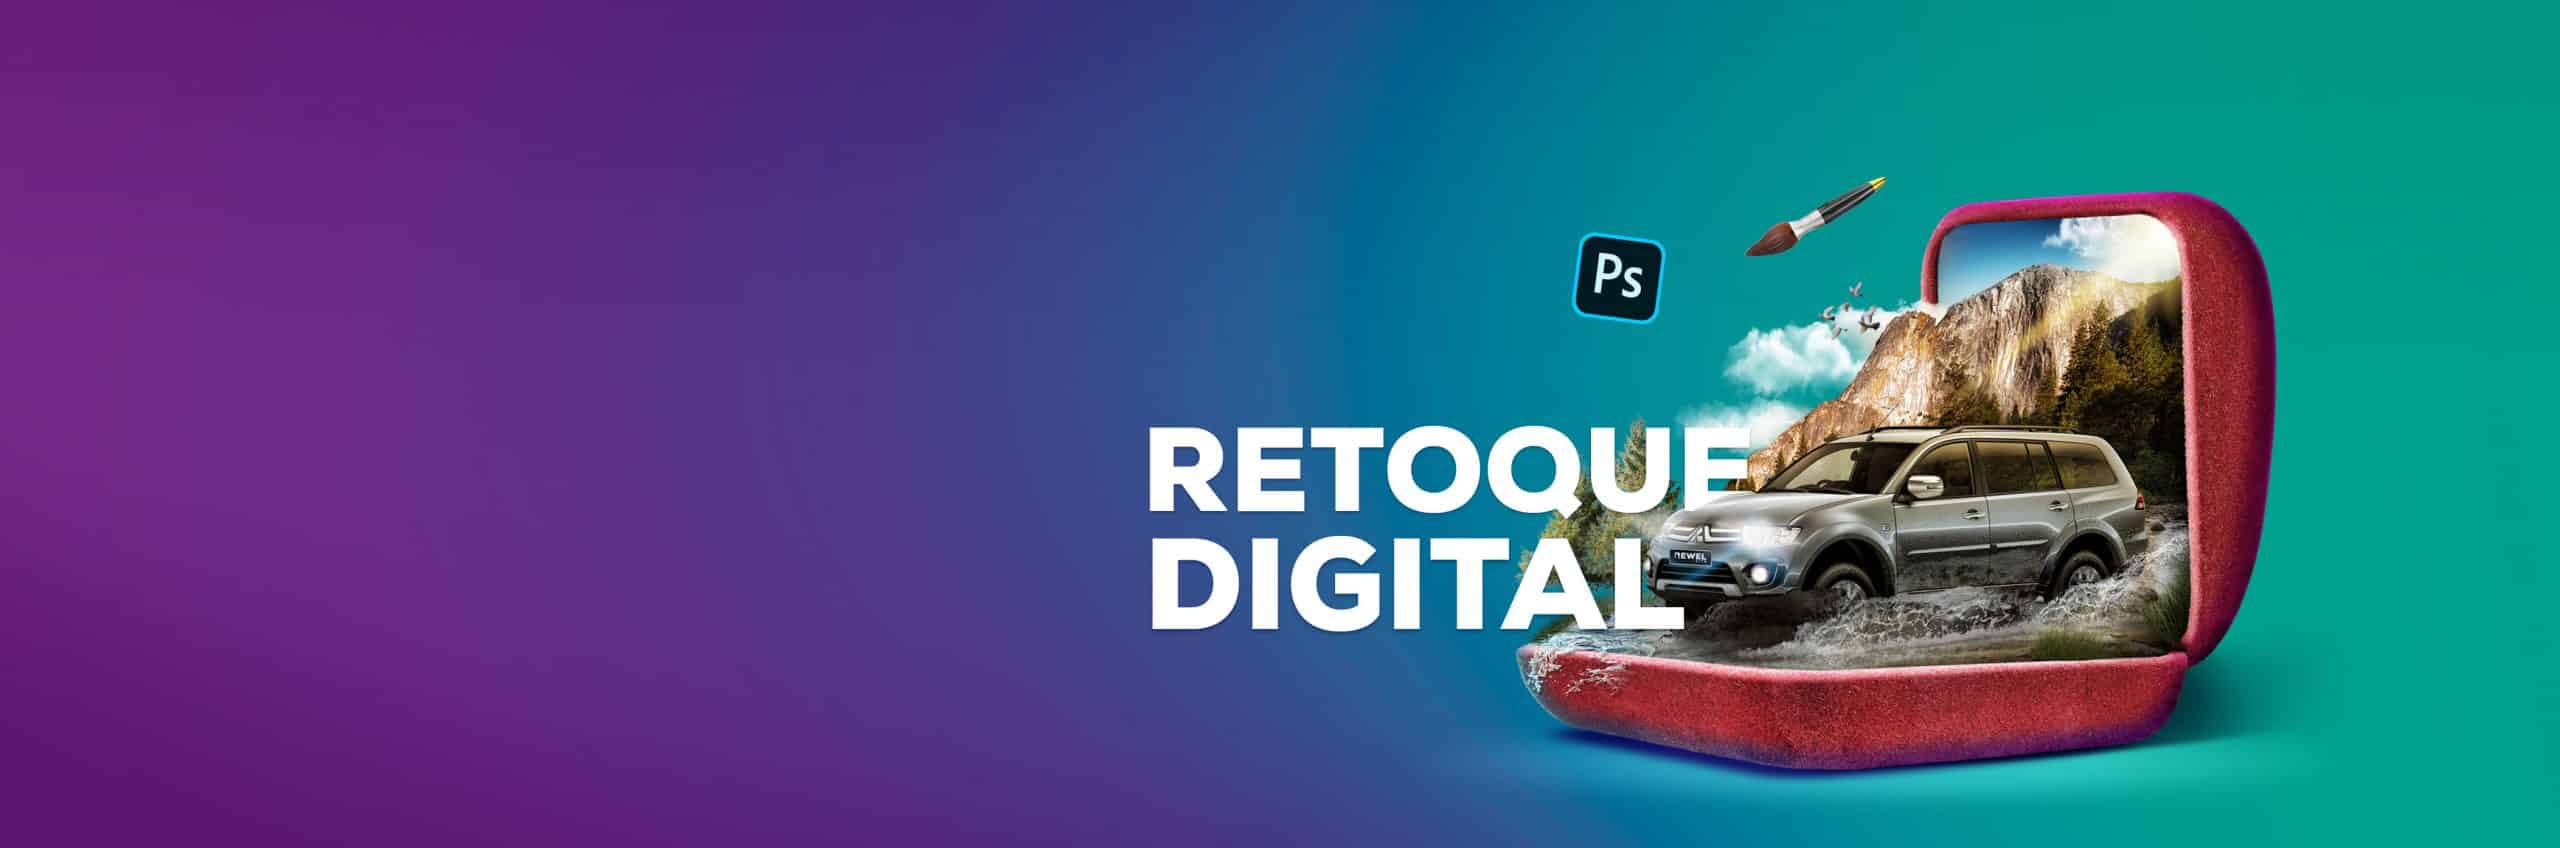 rewel-site-retoque-digital